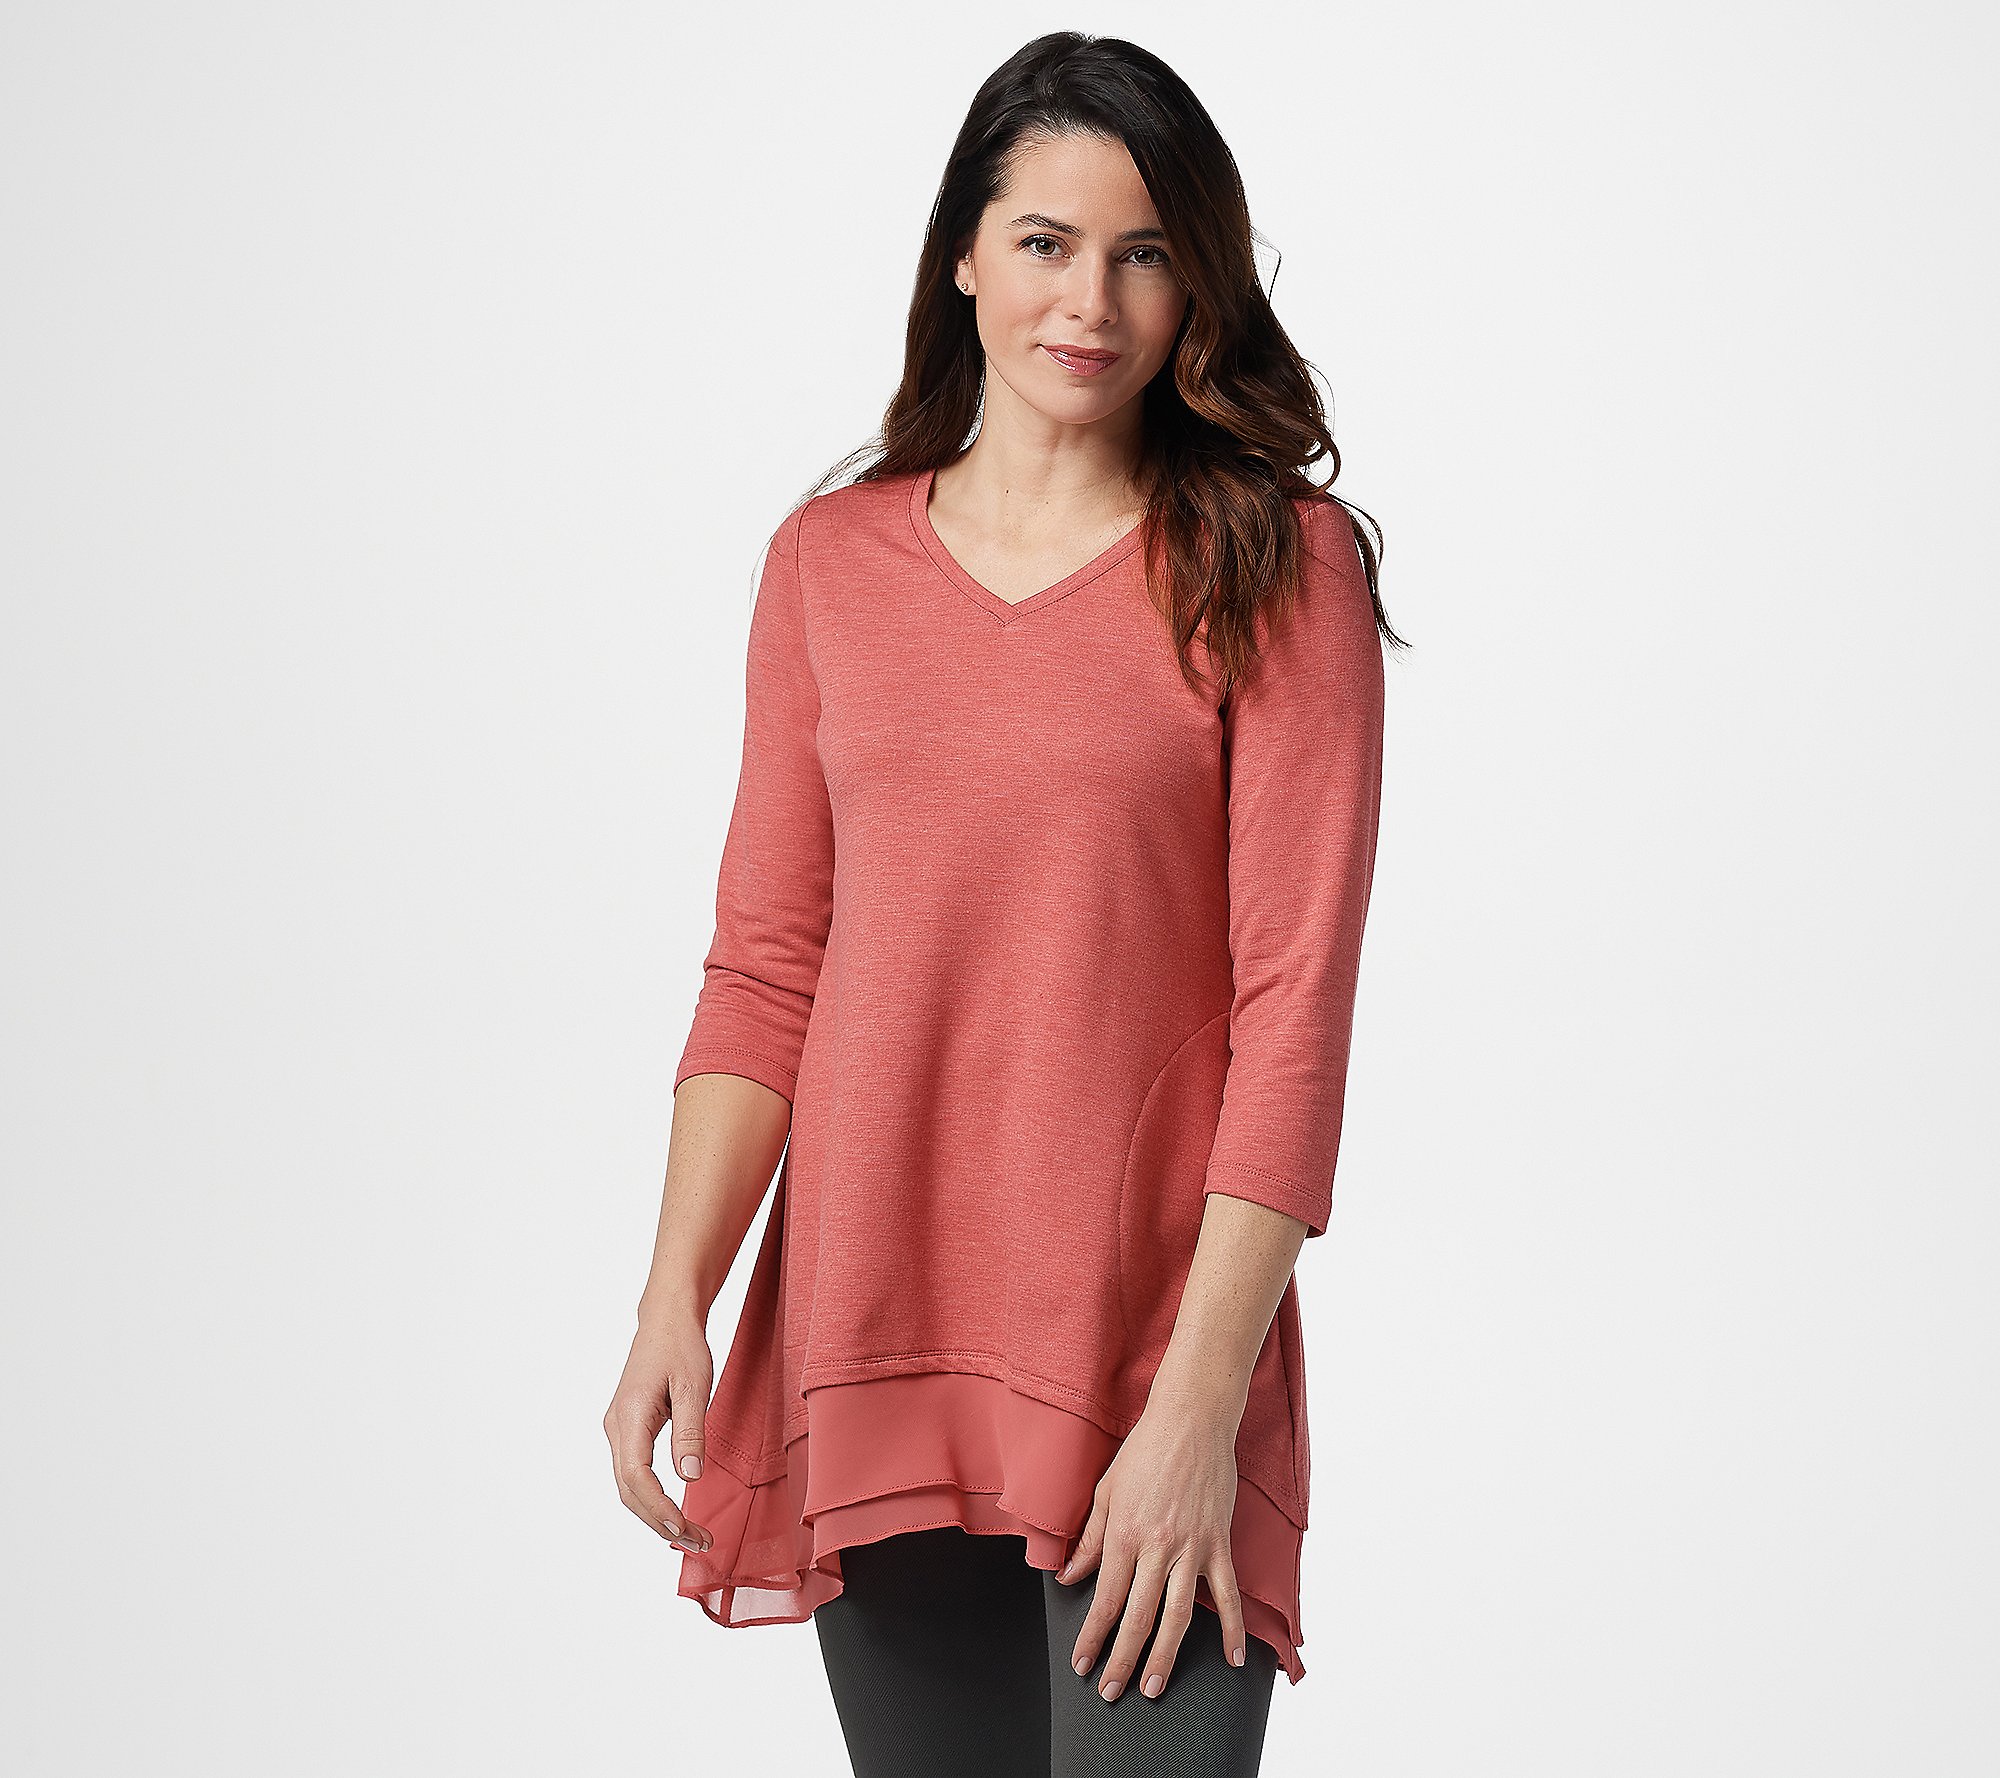 Logo Lounge Lori Goldstein main Tie-teints Plush Sweatshirt Coton Berry Rose Nouveau